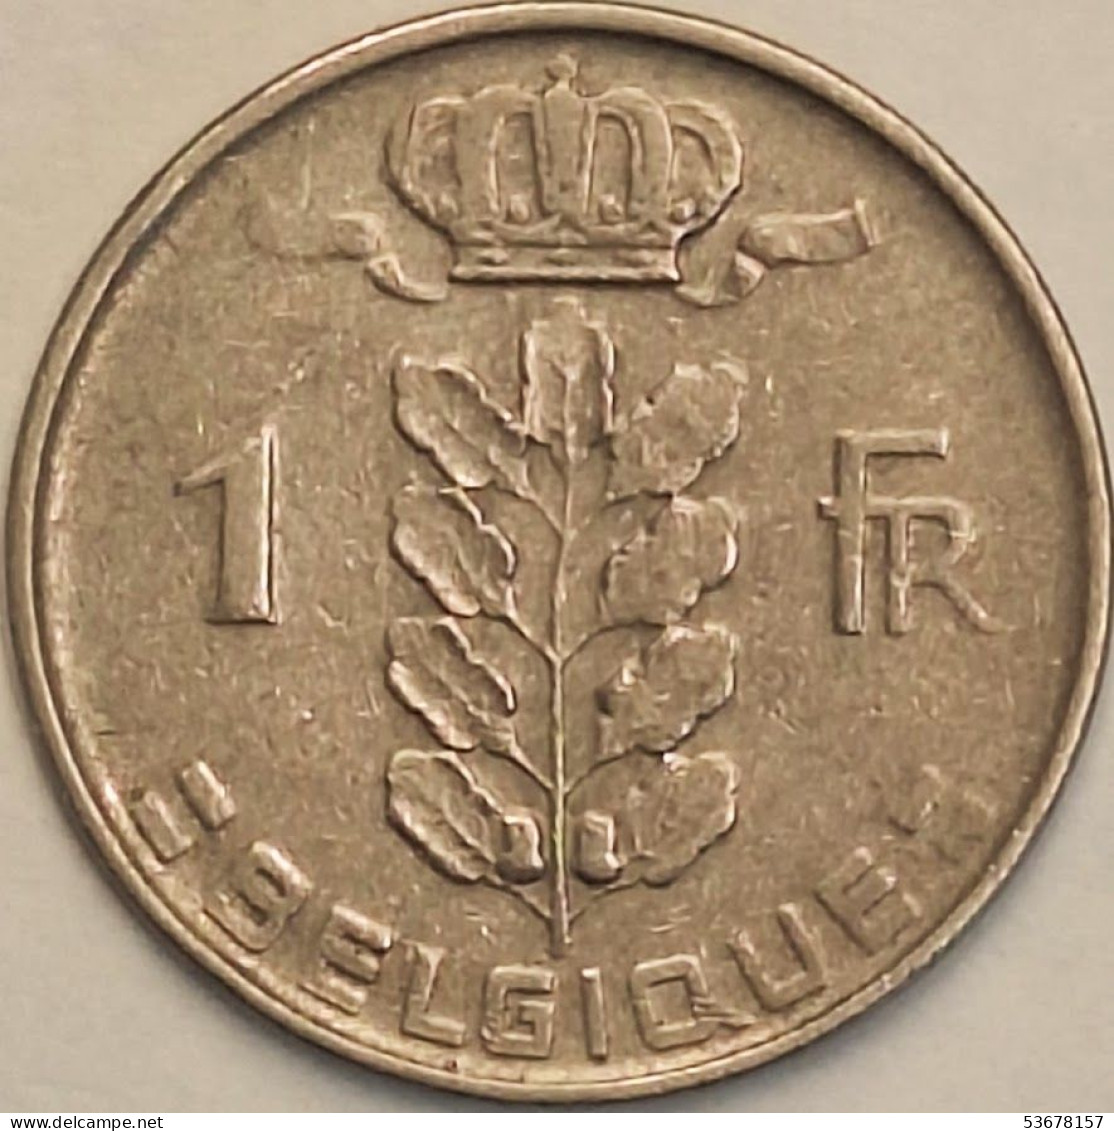 Belgium - Franc 1959, KM# 142.1 (#3108) - 1 Franc